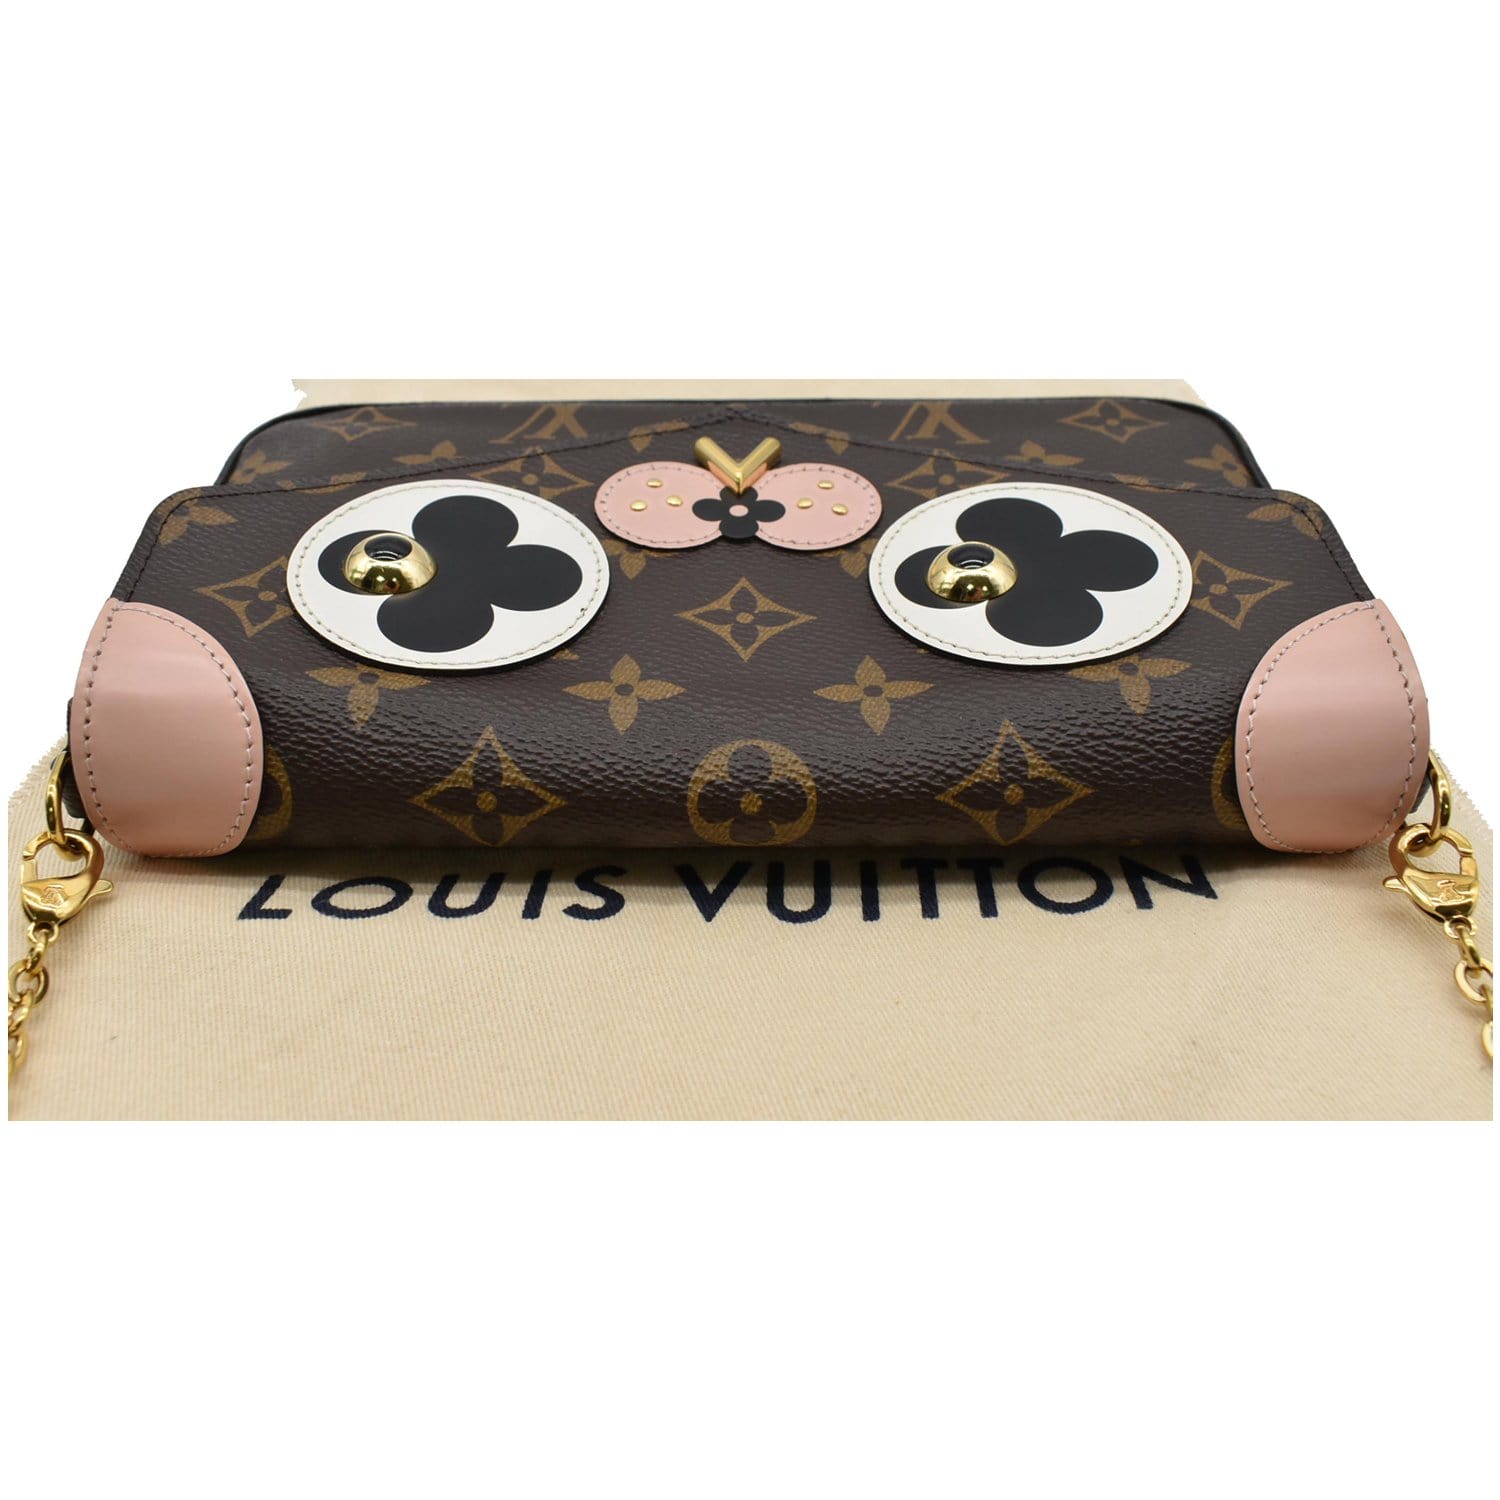 The Louis Vuitton Dog